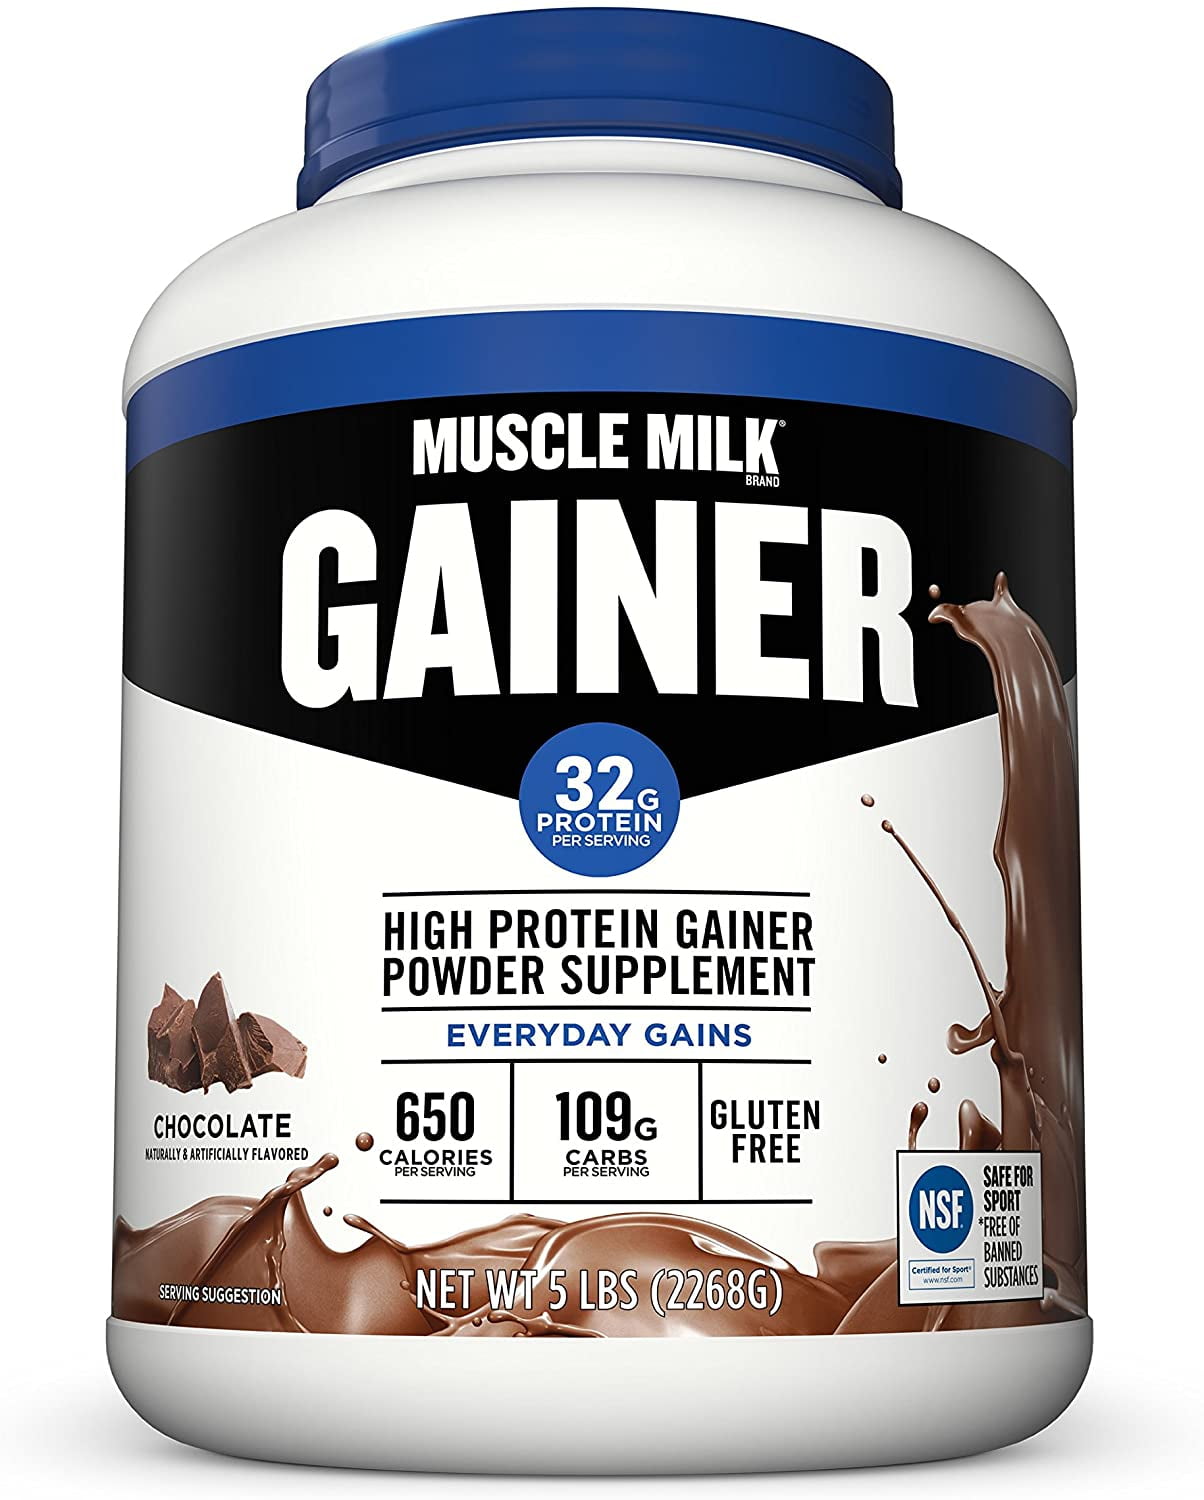 Muscle Milk Gainer Protein Powder, Chocolate, 32g Protein, 5 lbs -  